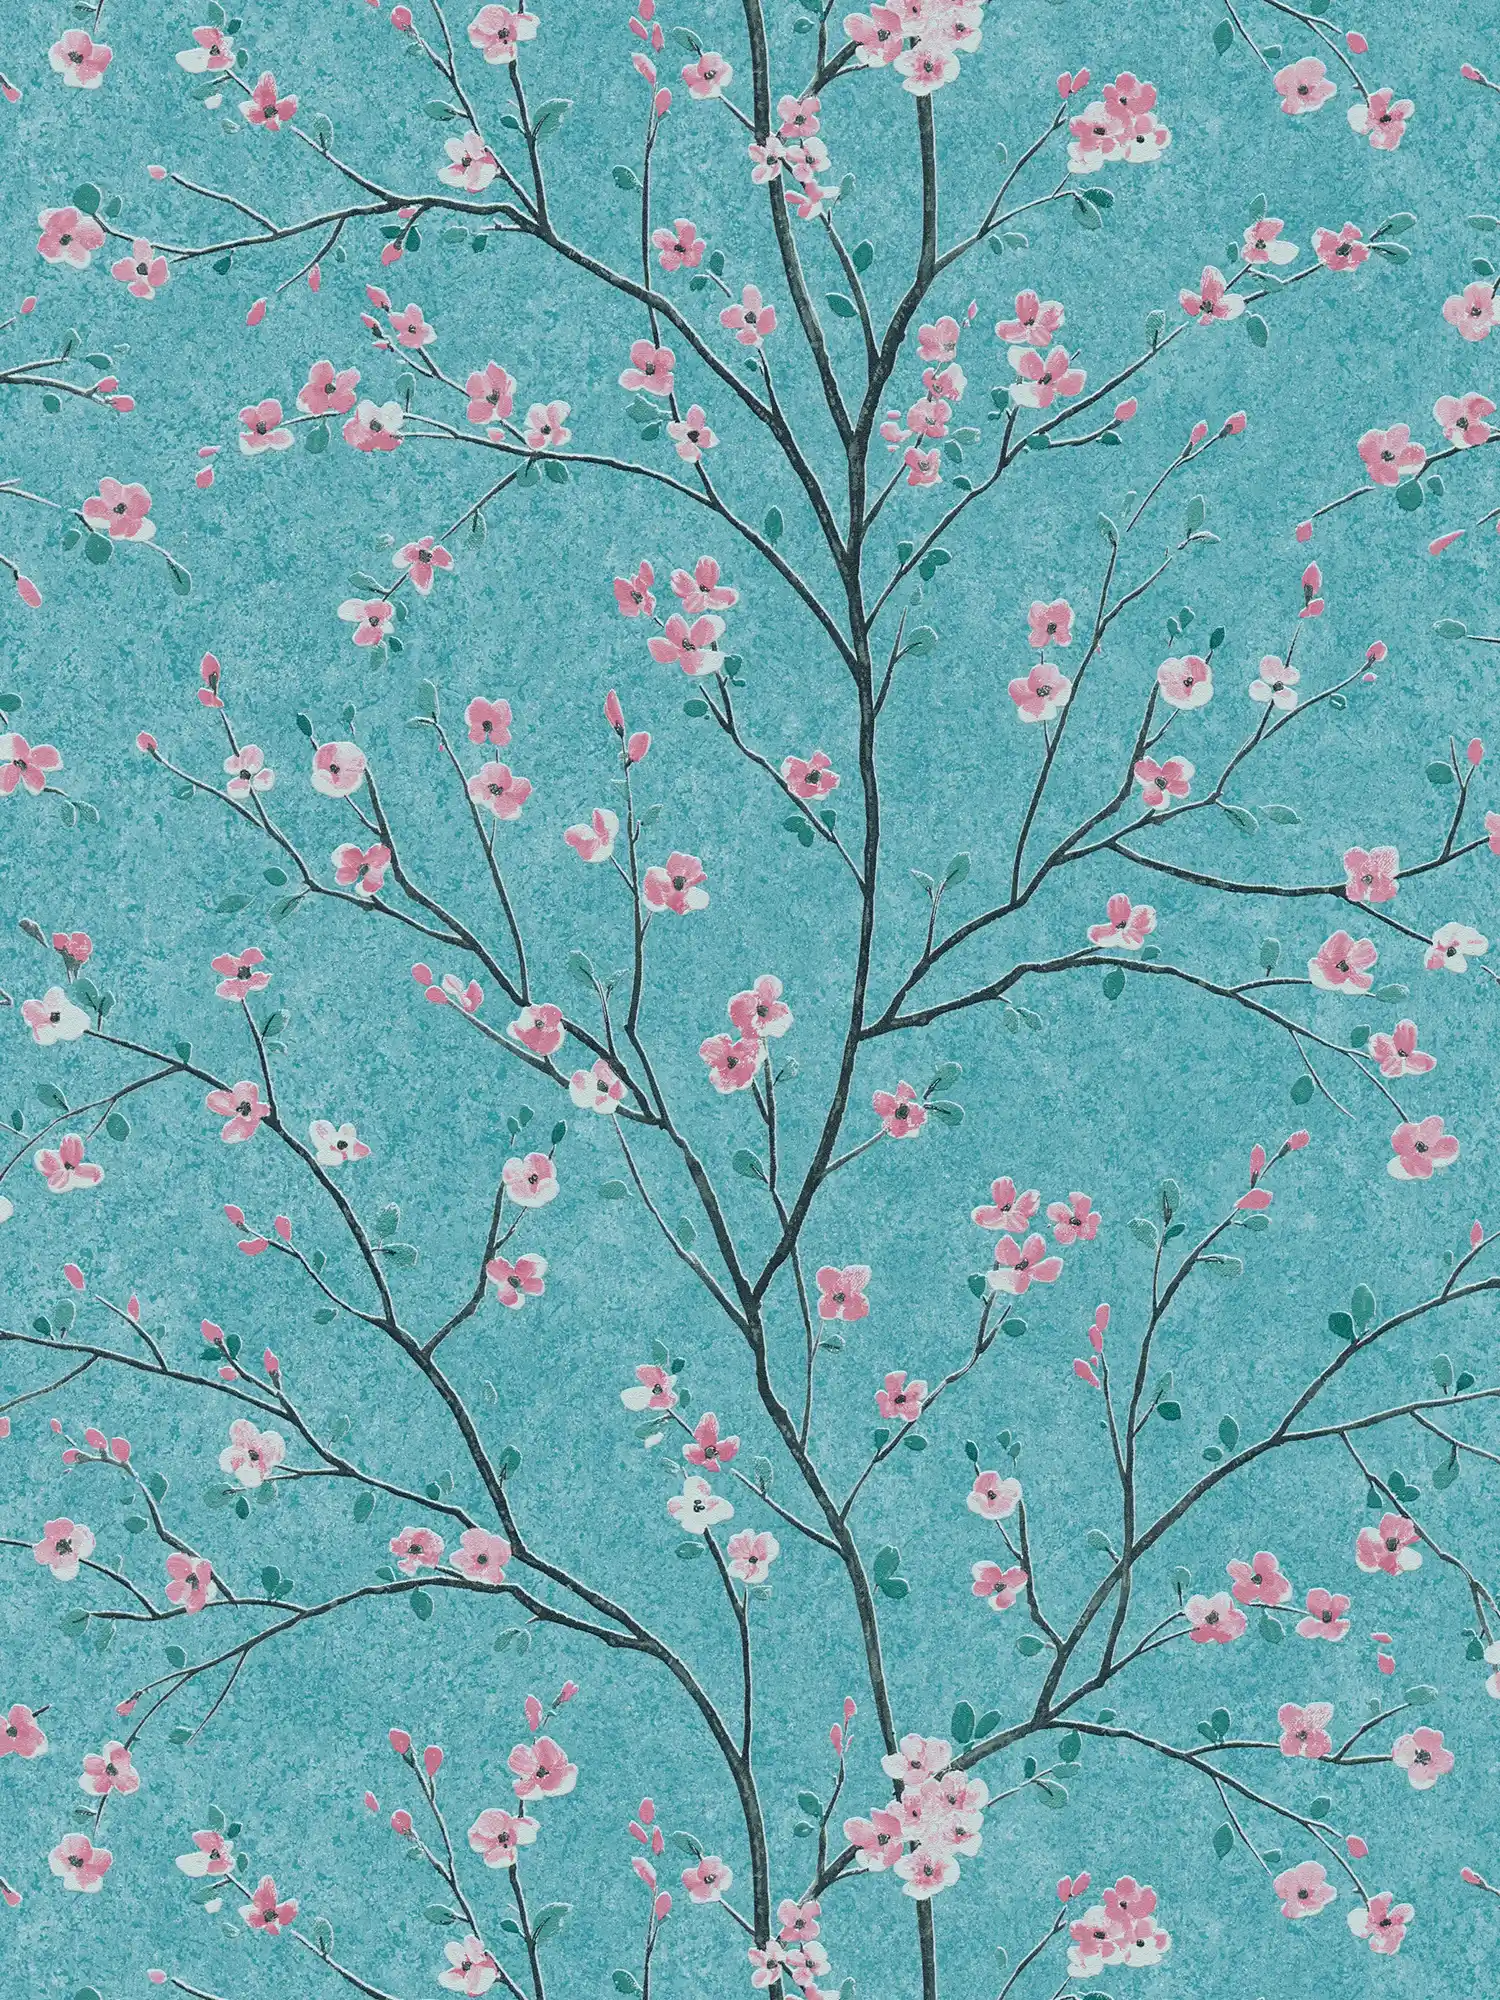 Japanische Kirschblüten Tapete – Blau, Grün, Rosa
